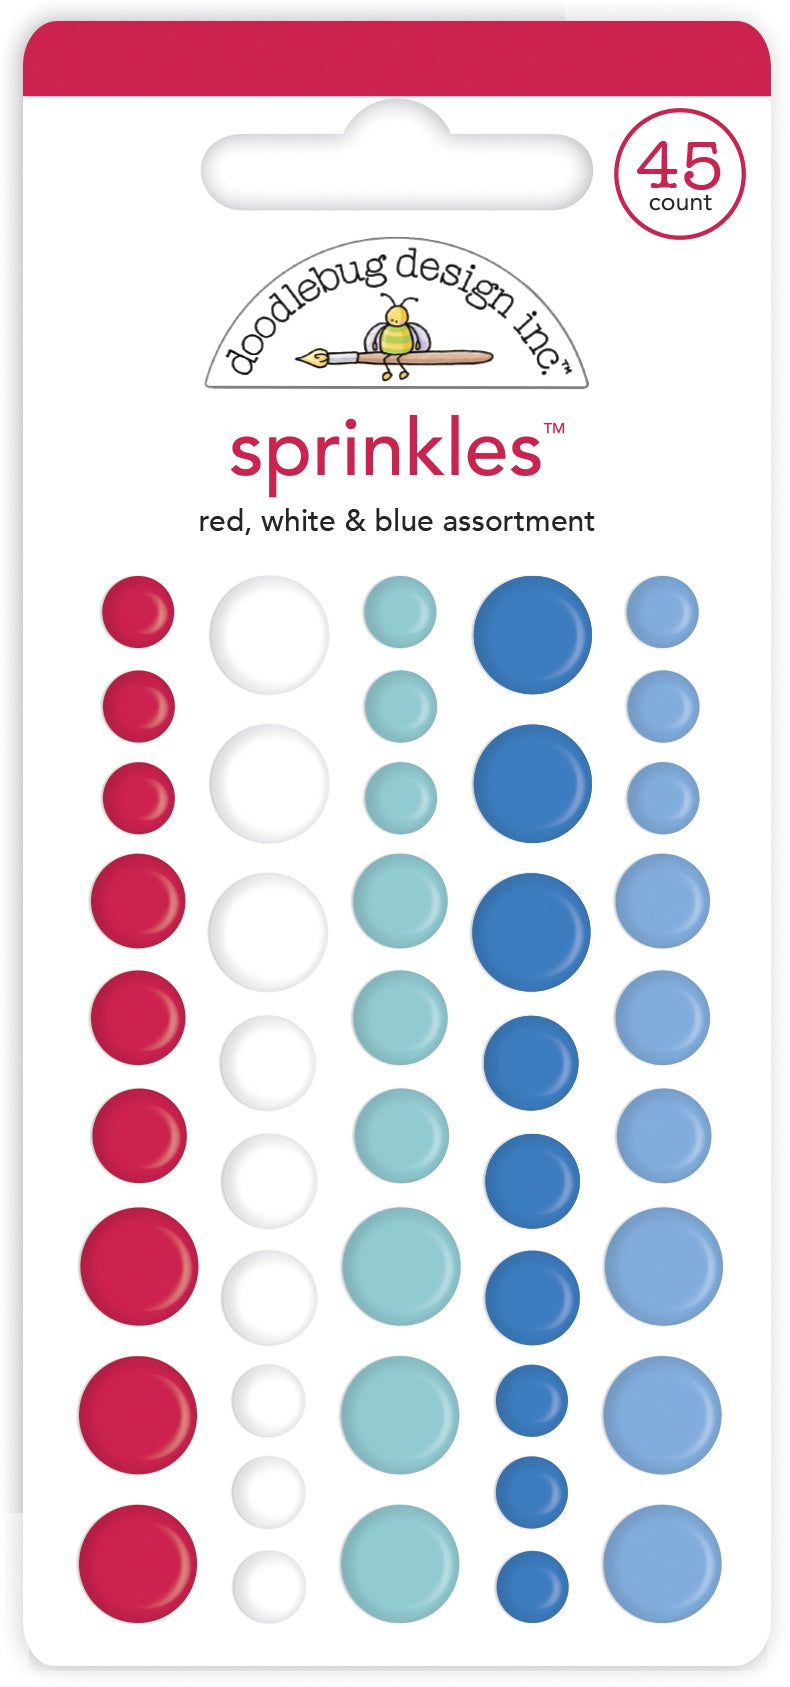 Doodlebug Design: Sprinkles - Red, White & Blue Assortment